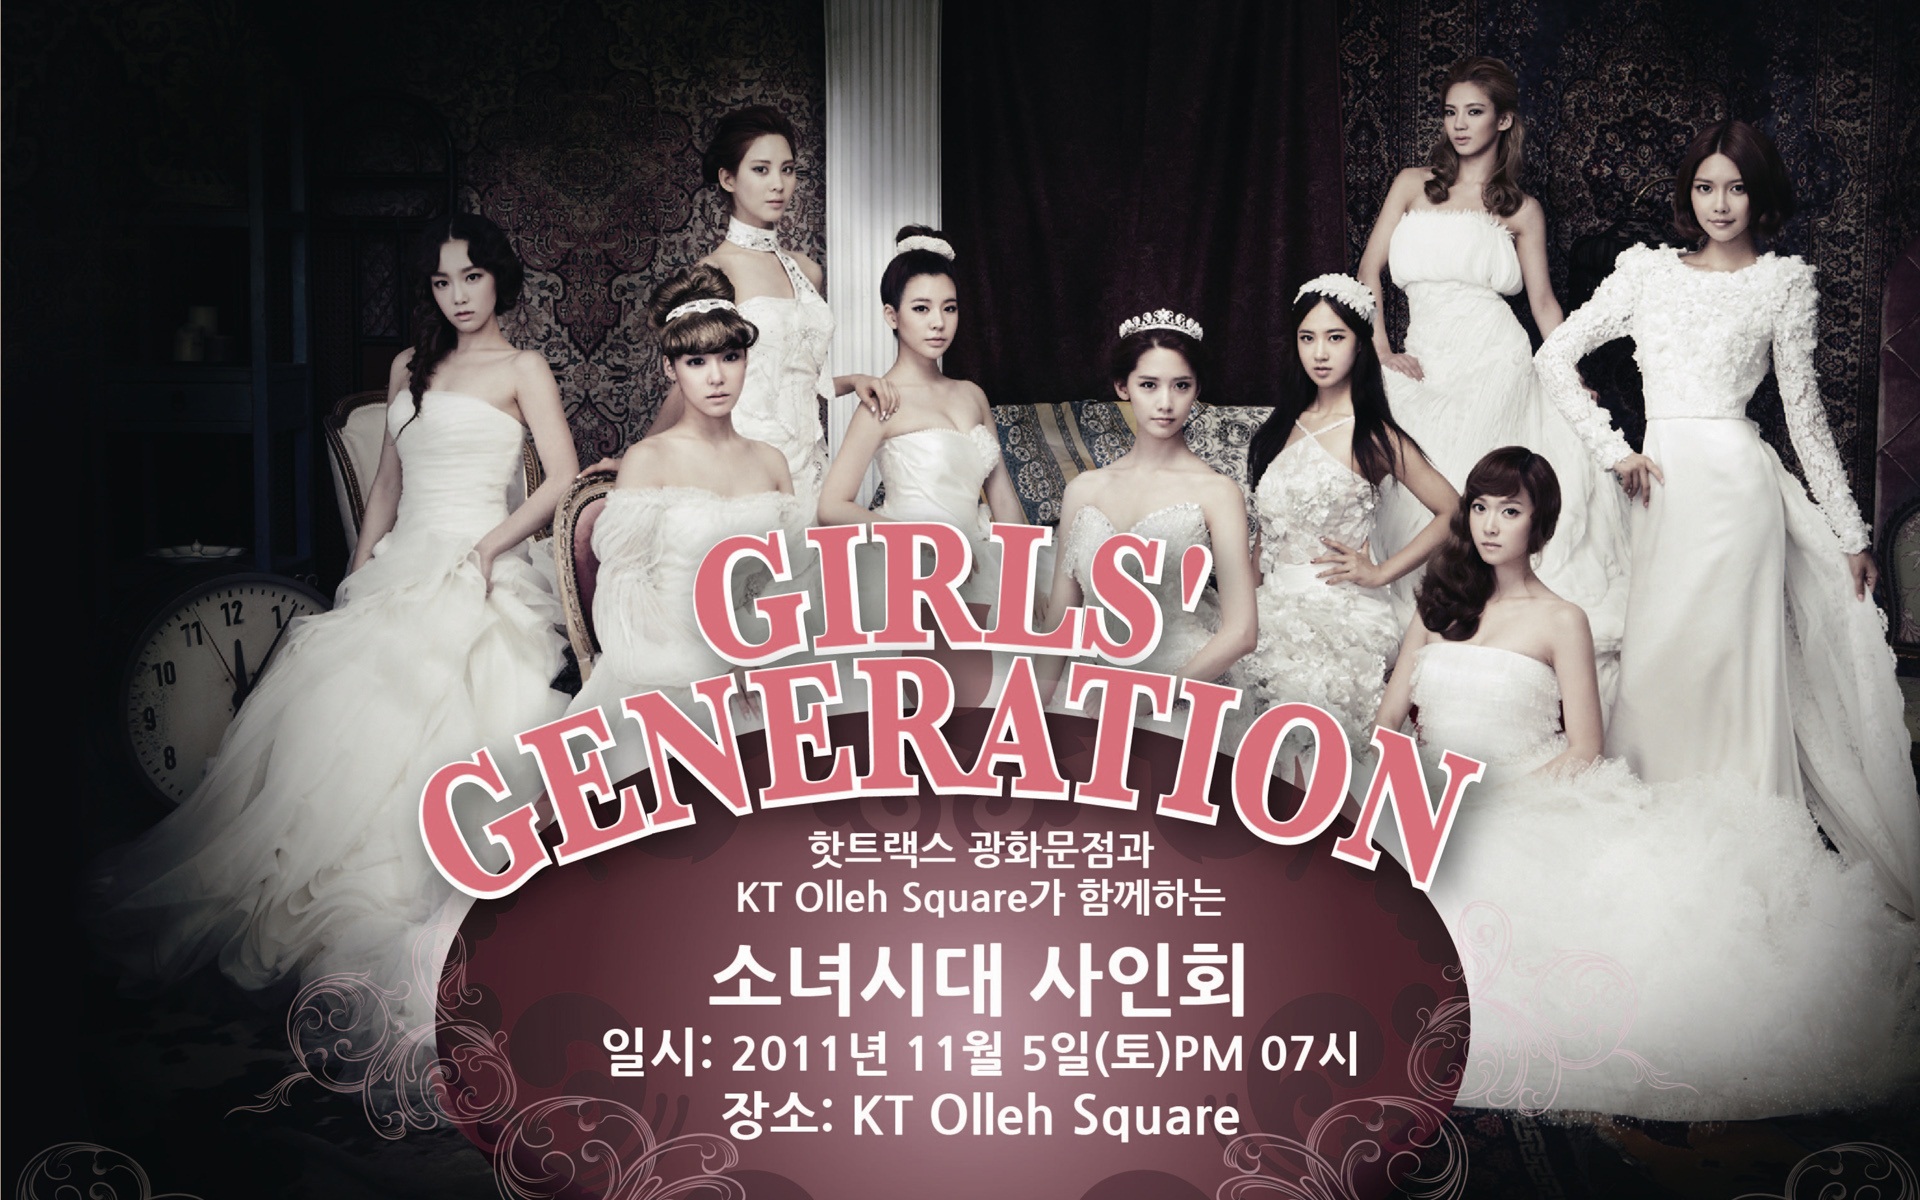 Generation Girls HD wallpapers dernière collection #8 - 1920x1200